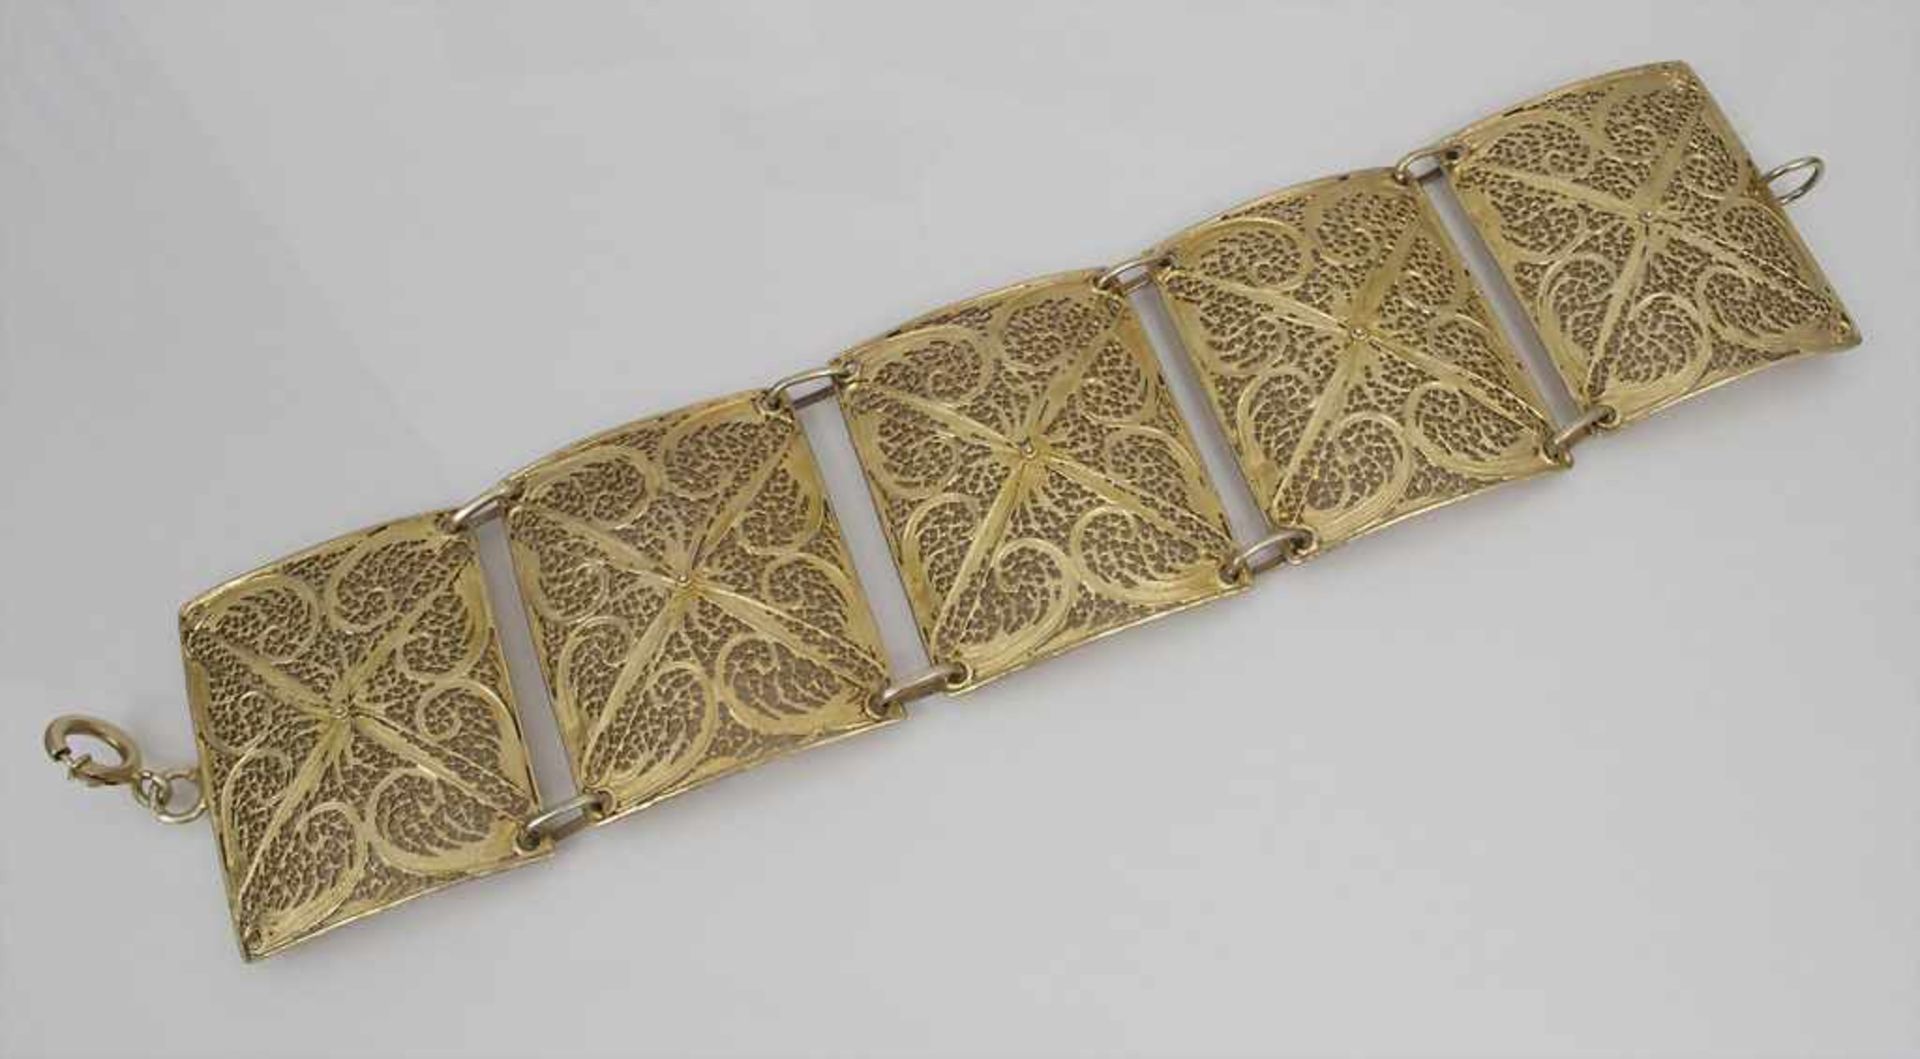 Filigran-Draht-Armband / A bracelet of filigree gold wire Material: Gelbgold 333/000 8 Kt geprüft,